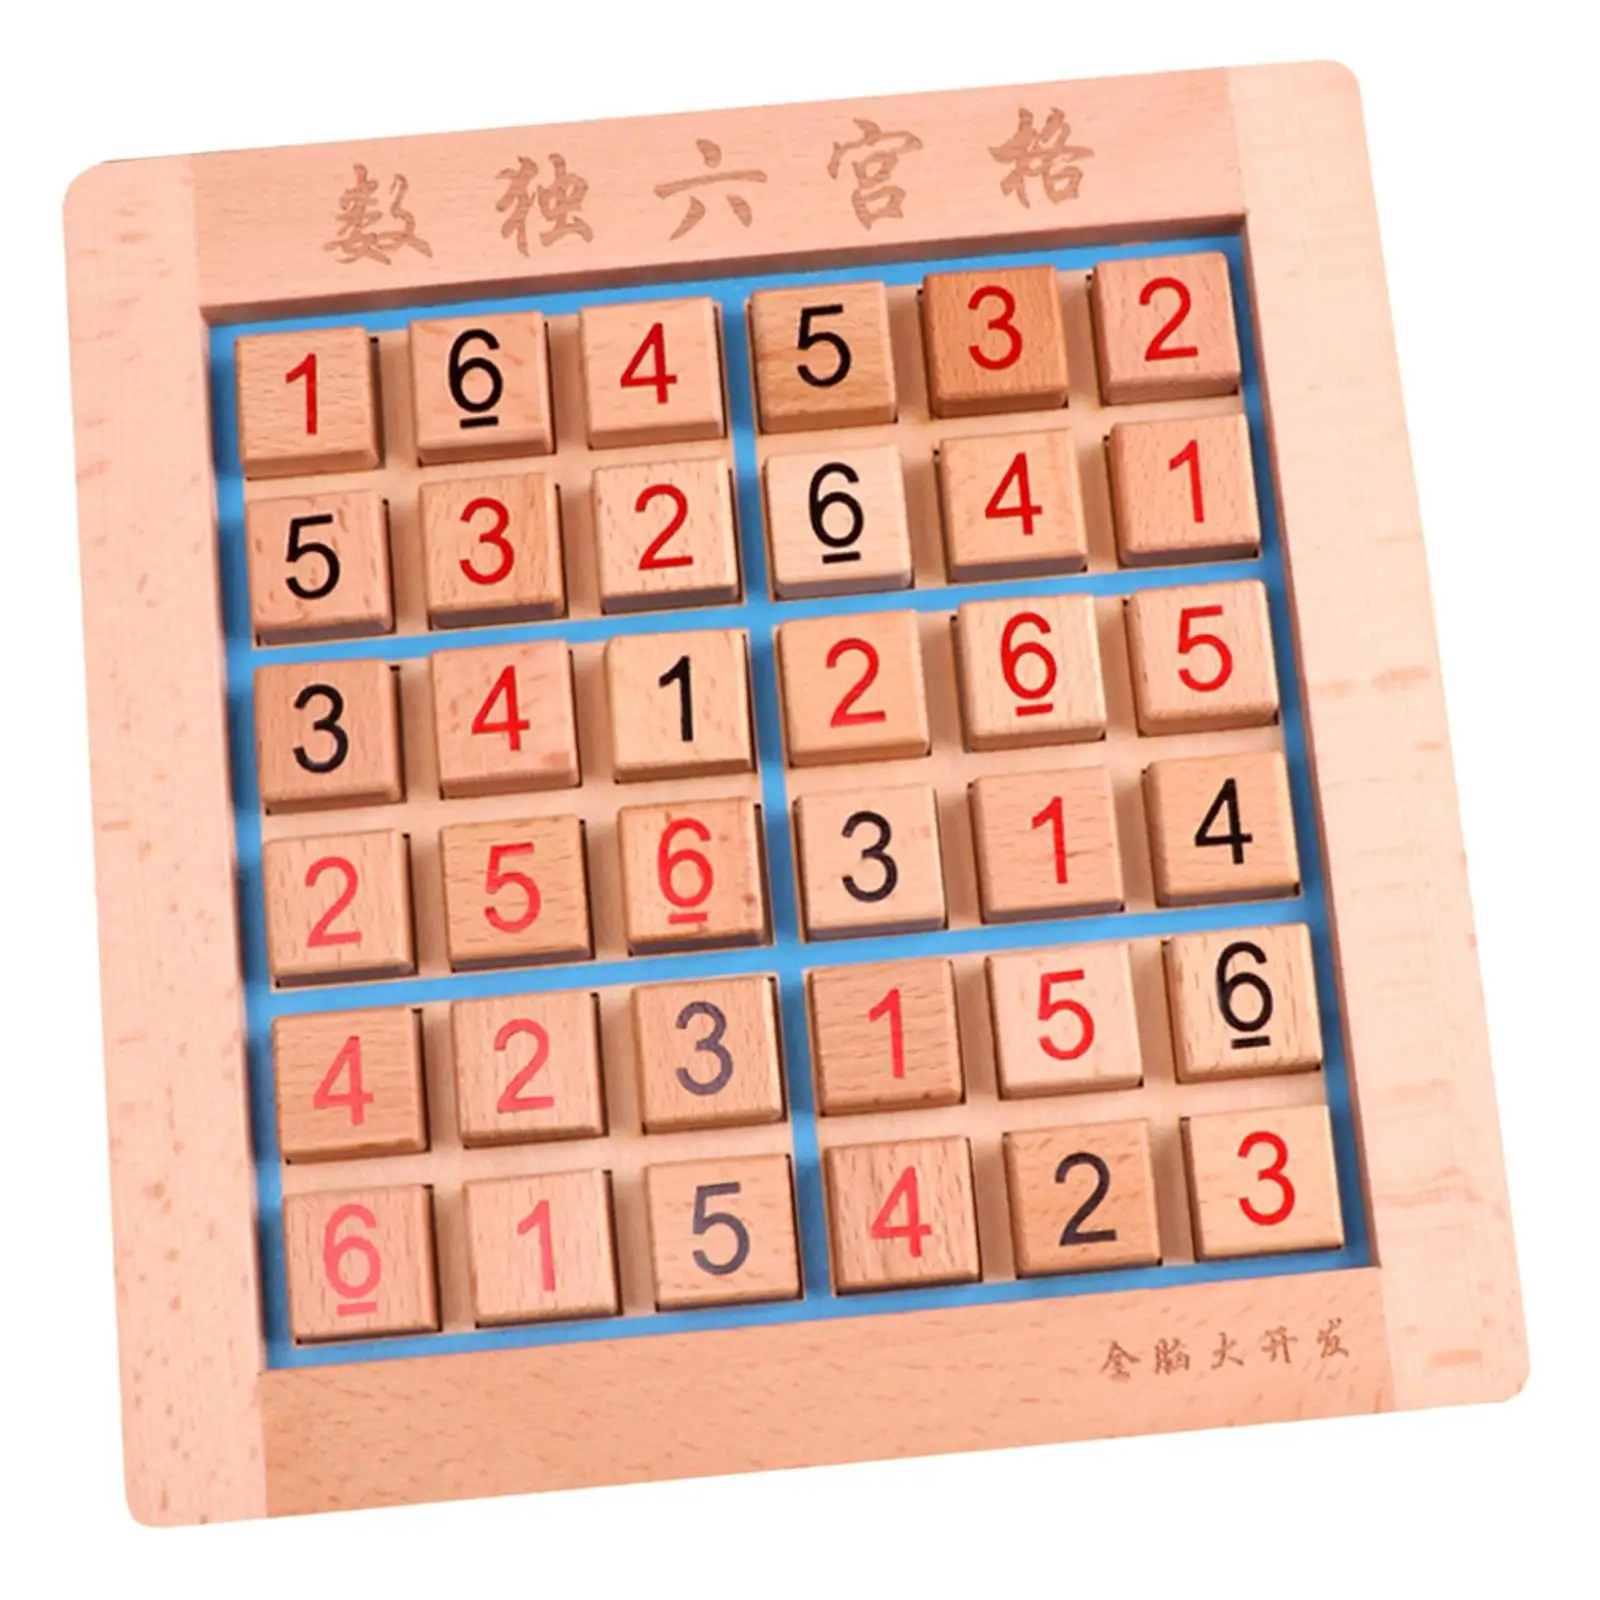 6 Grids Sudoku Board Game Mathematics Math Toy Digital Blocks Wood Desktop Toy for Girls Boys Preschool Elementary Children Kids